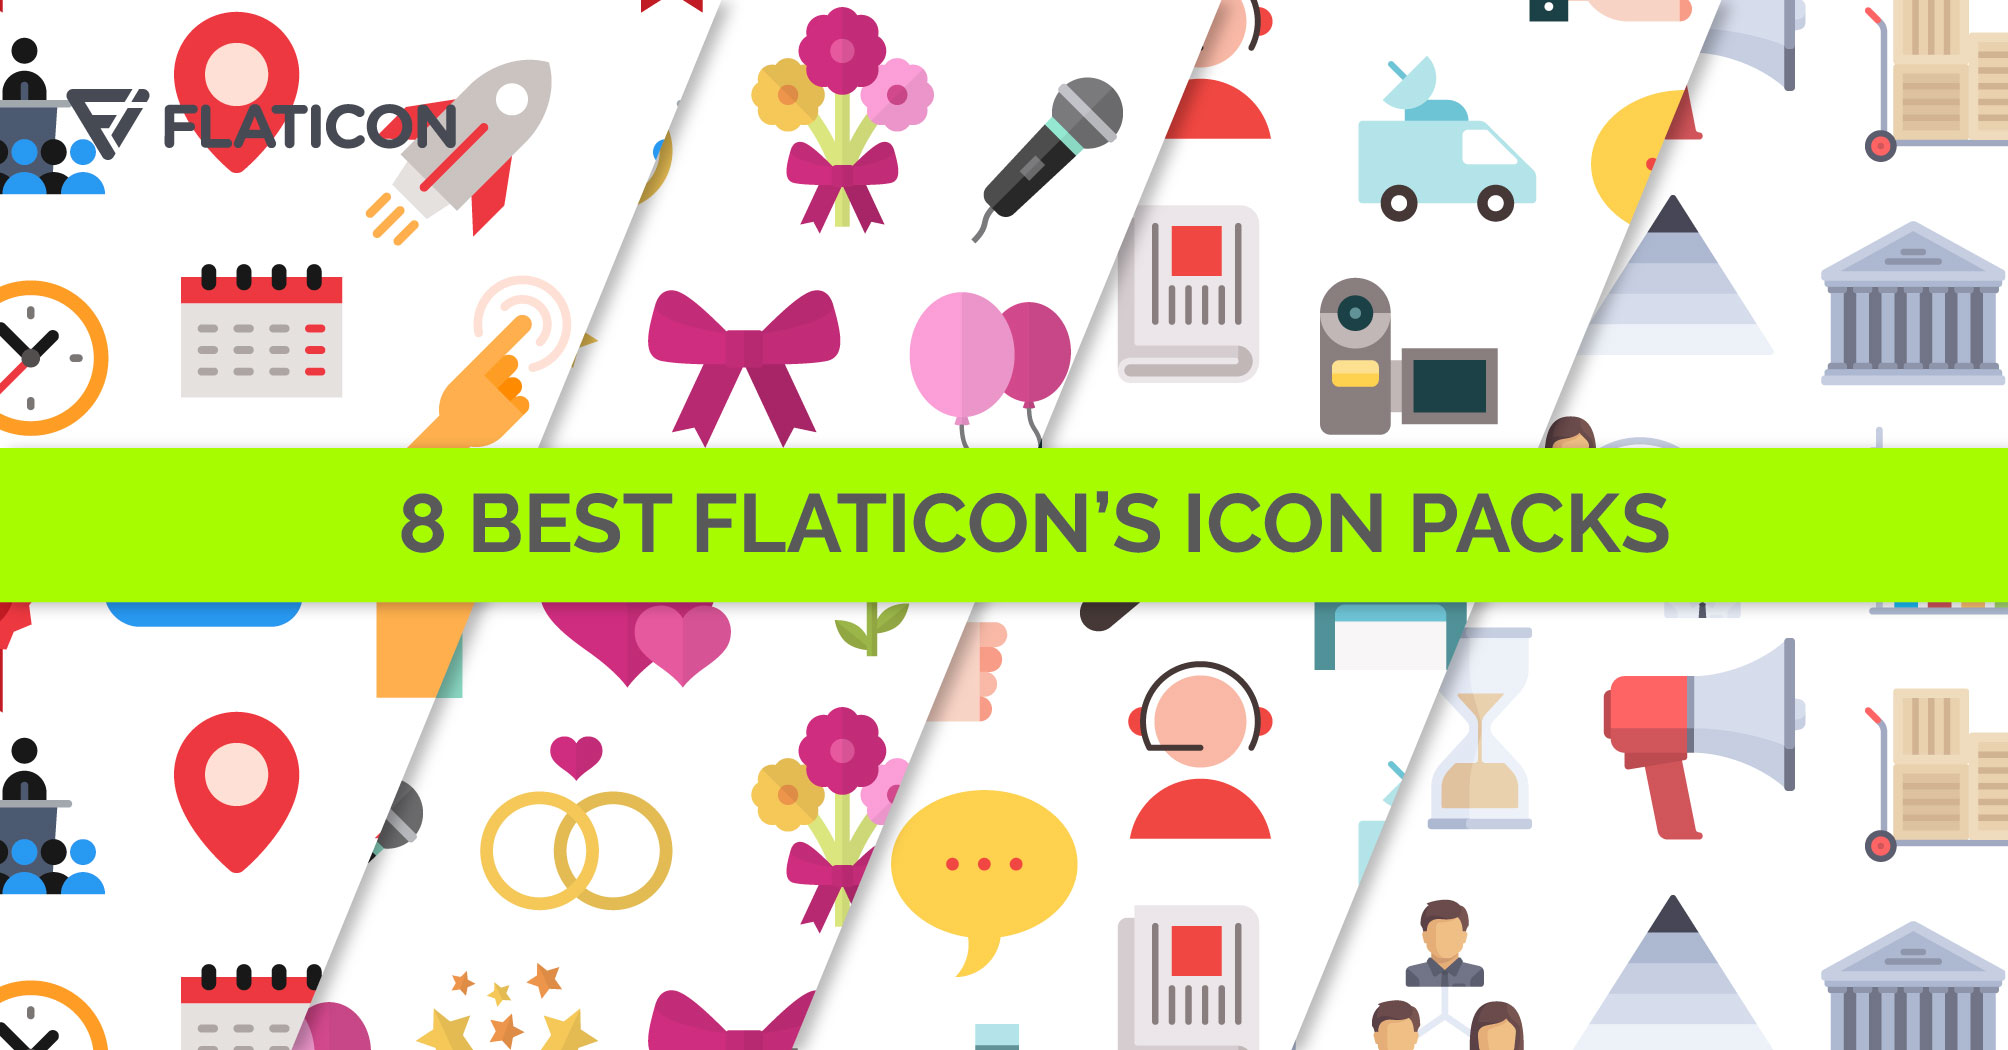 Flaticon icons